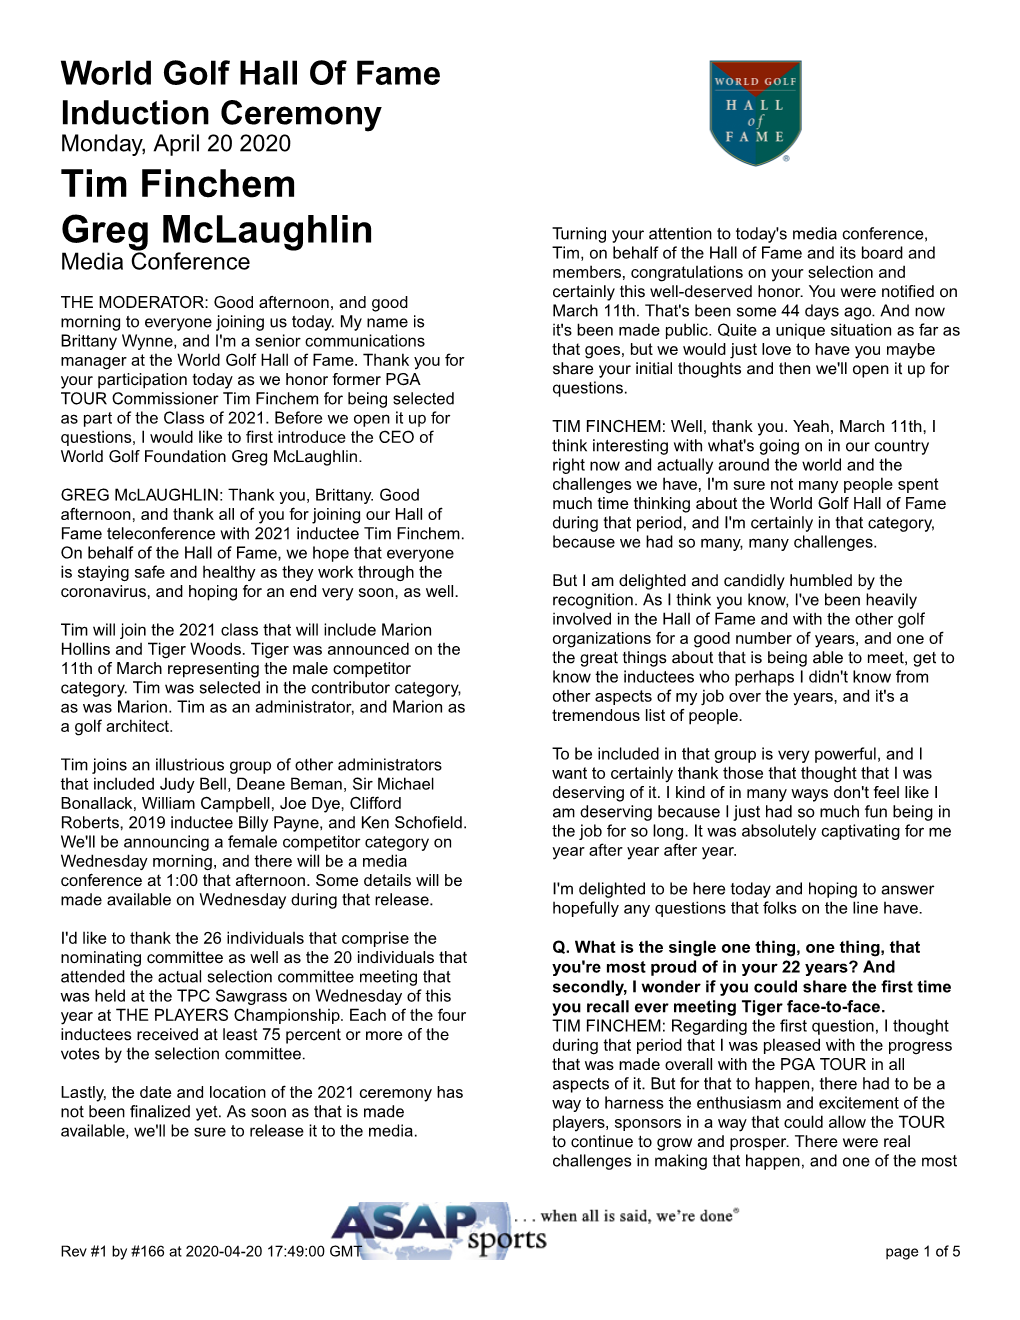 Tim Finchem Greg Mclaughlin